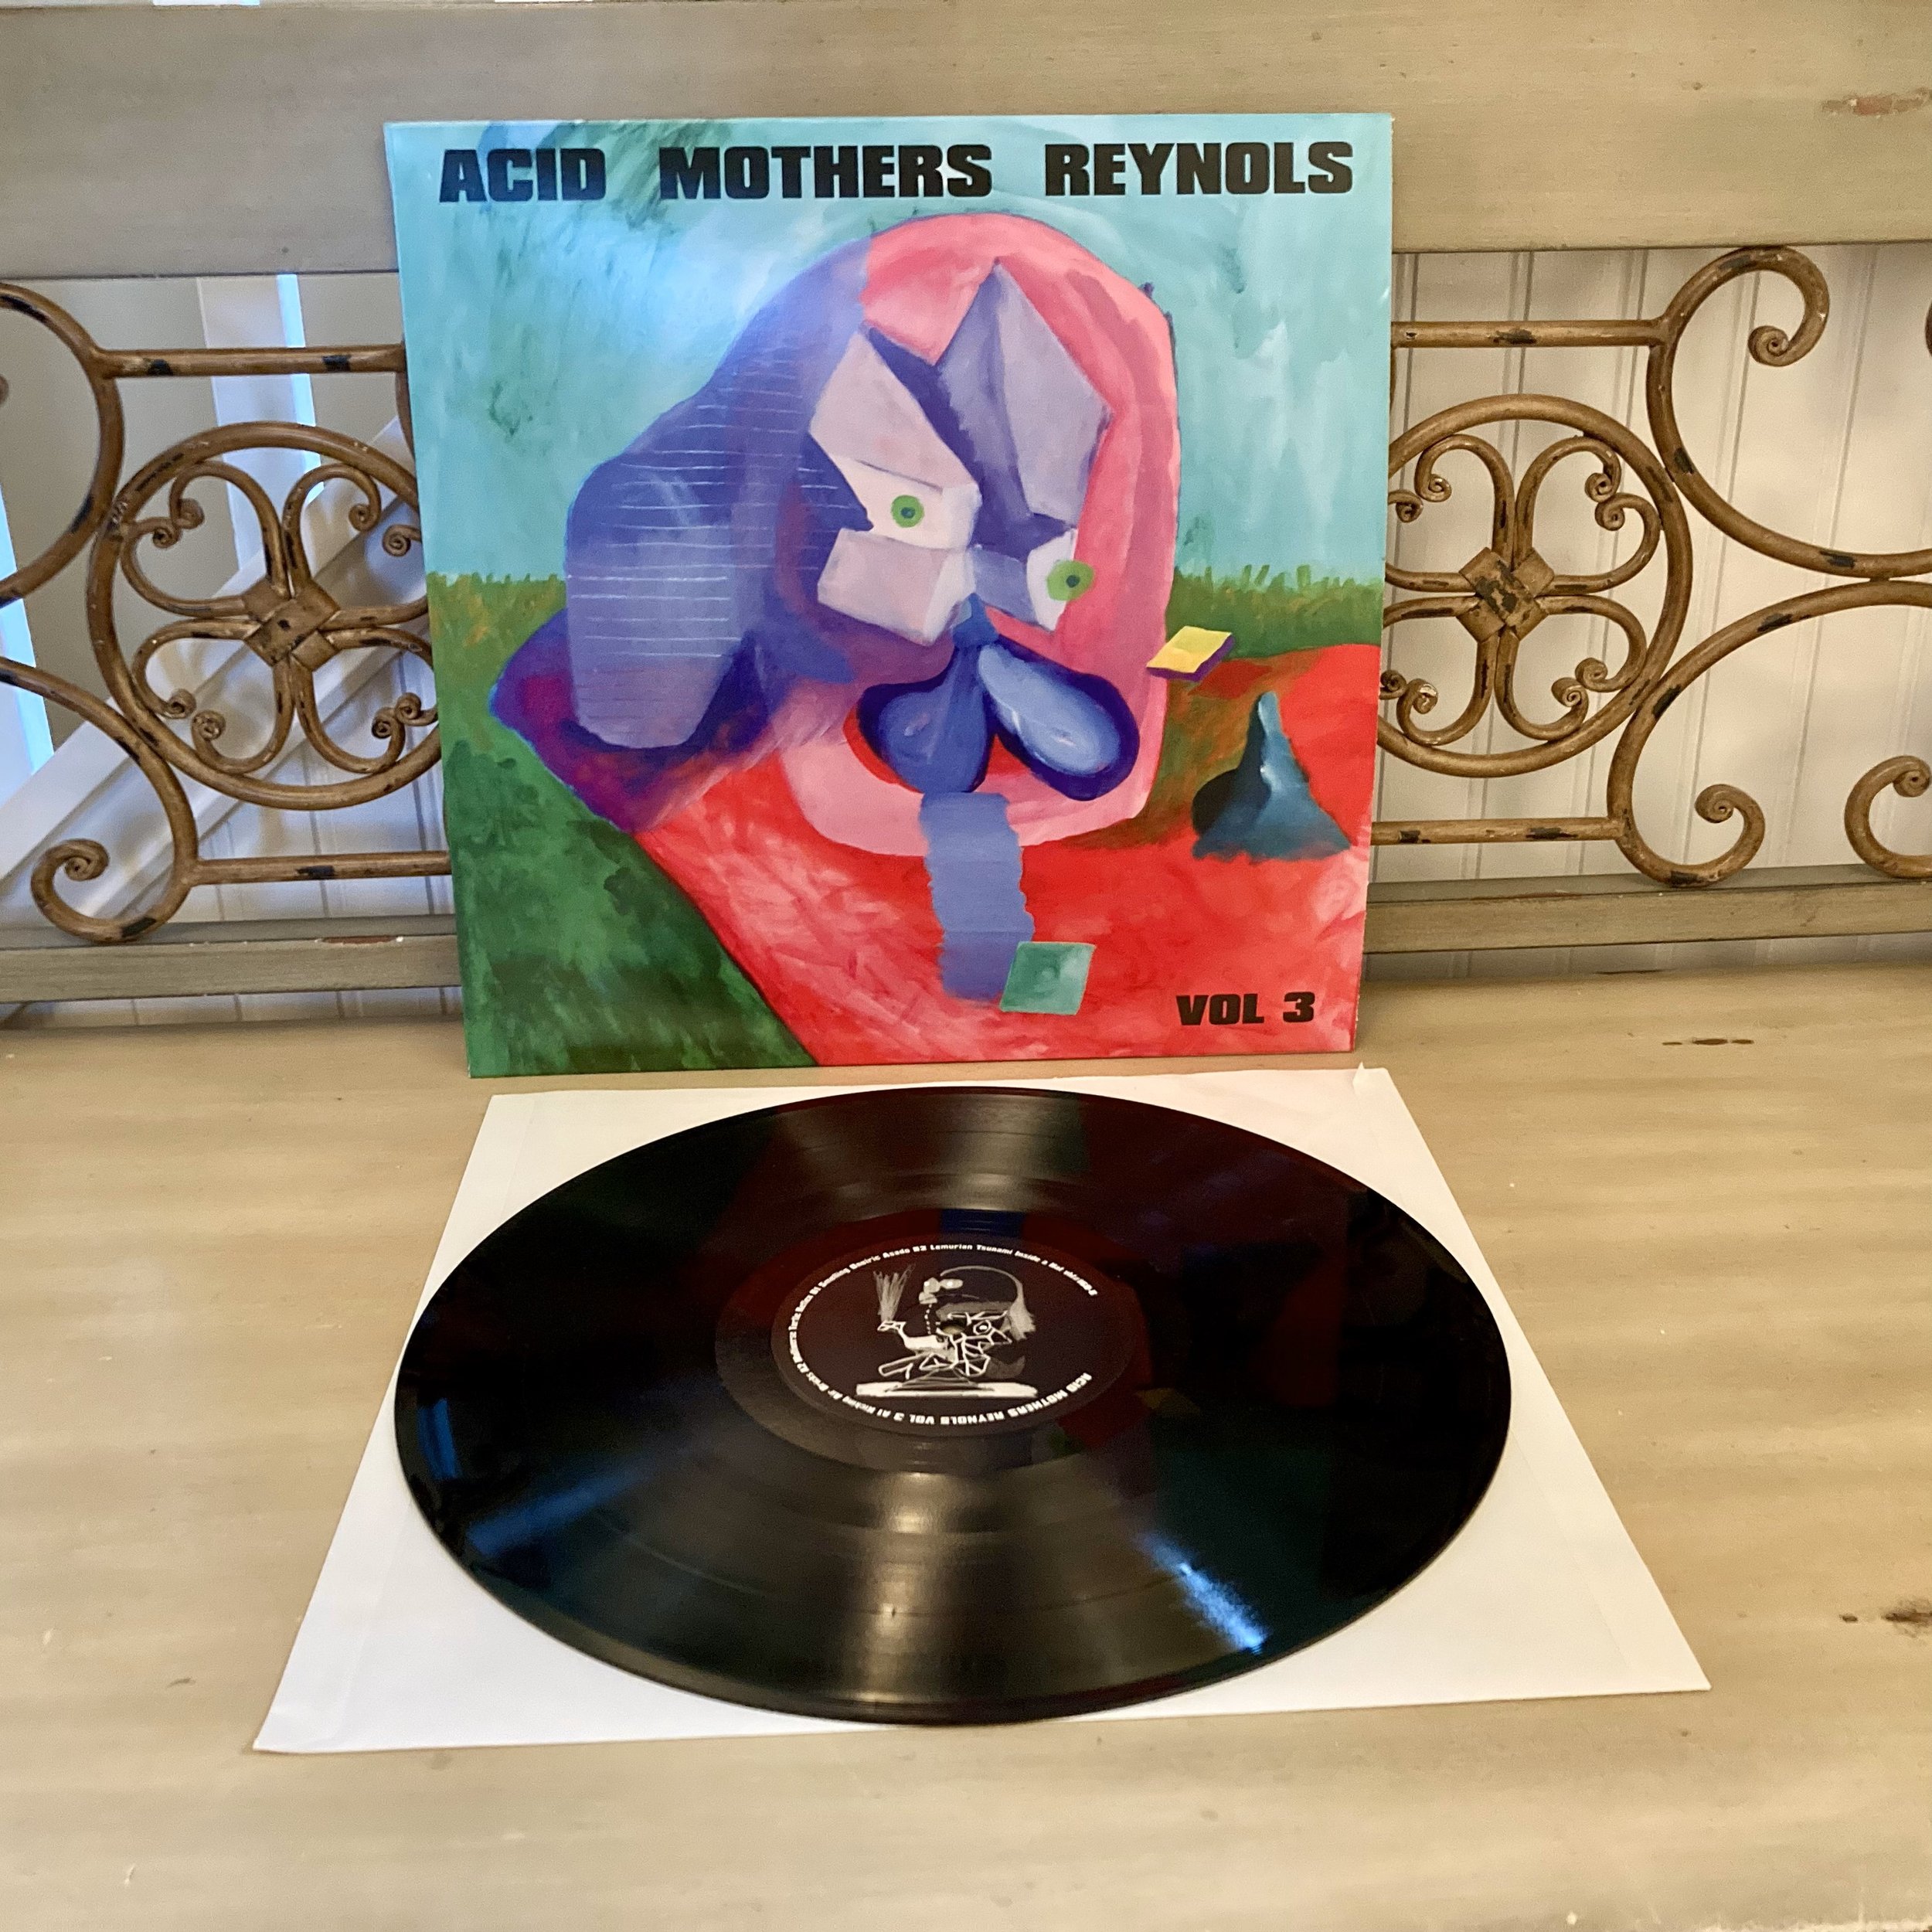 vhf#160 Acid Mothers Reynols "Vol. 3" LP